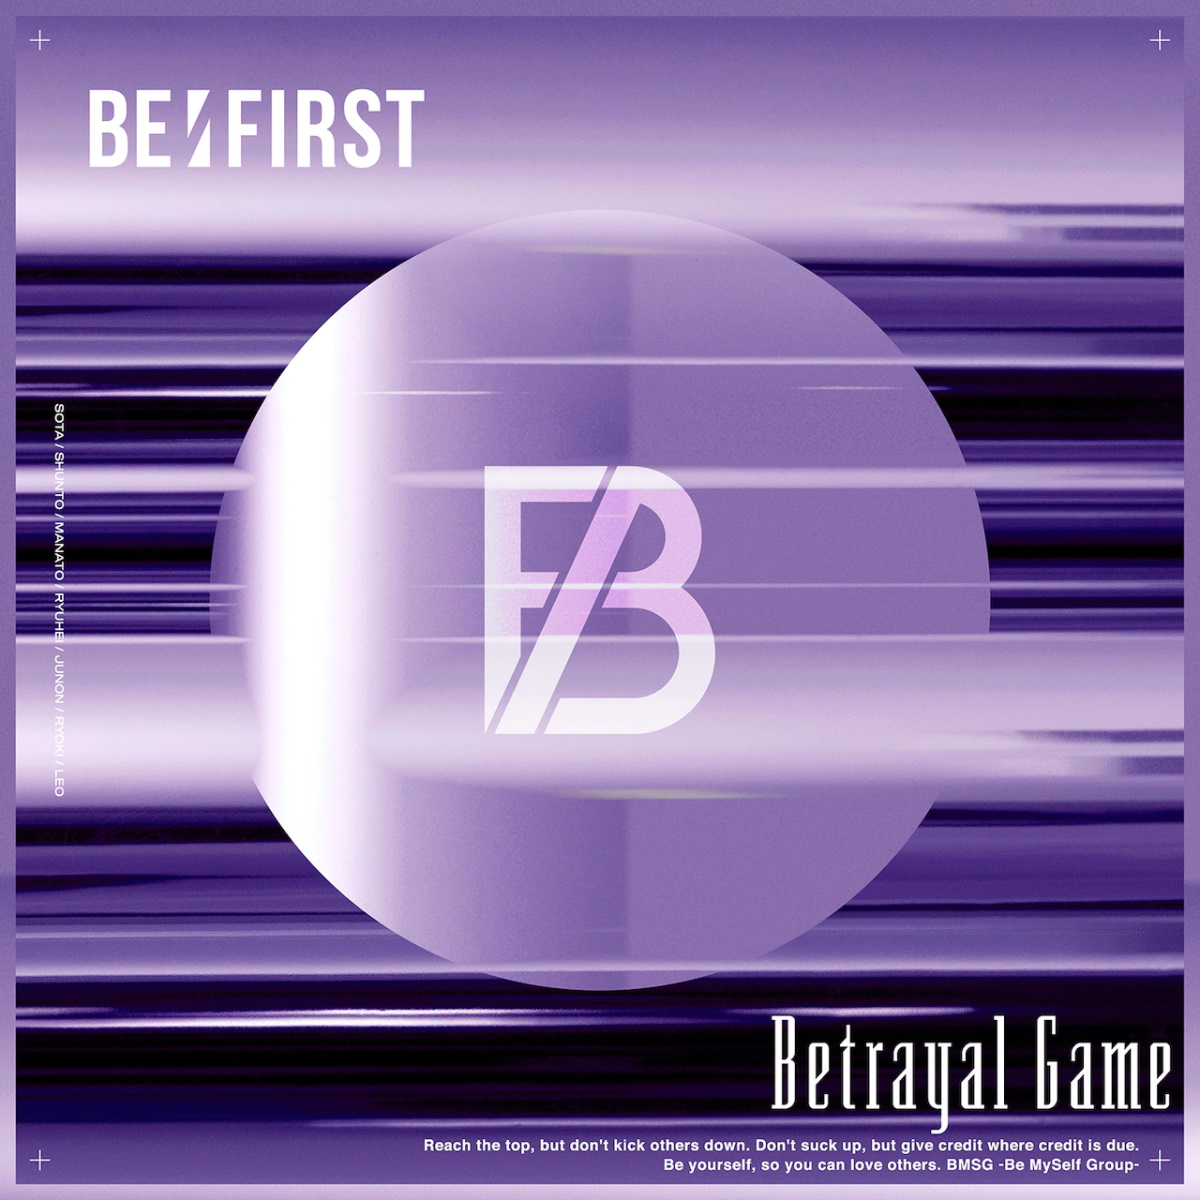 『BE:FIRST - Betrayal Game』収録の『Betrayal Game』ジャケット